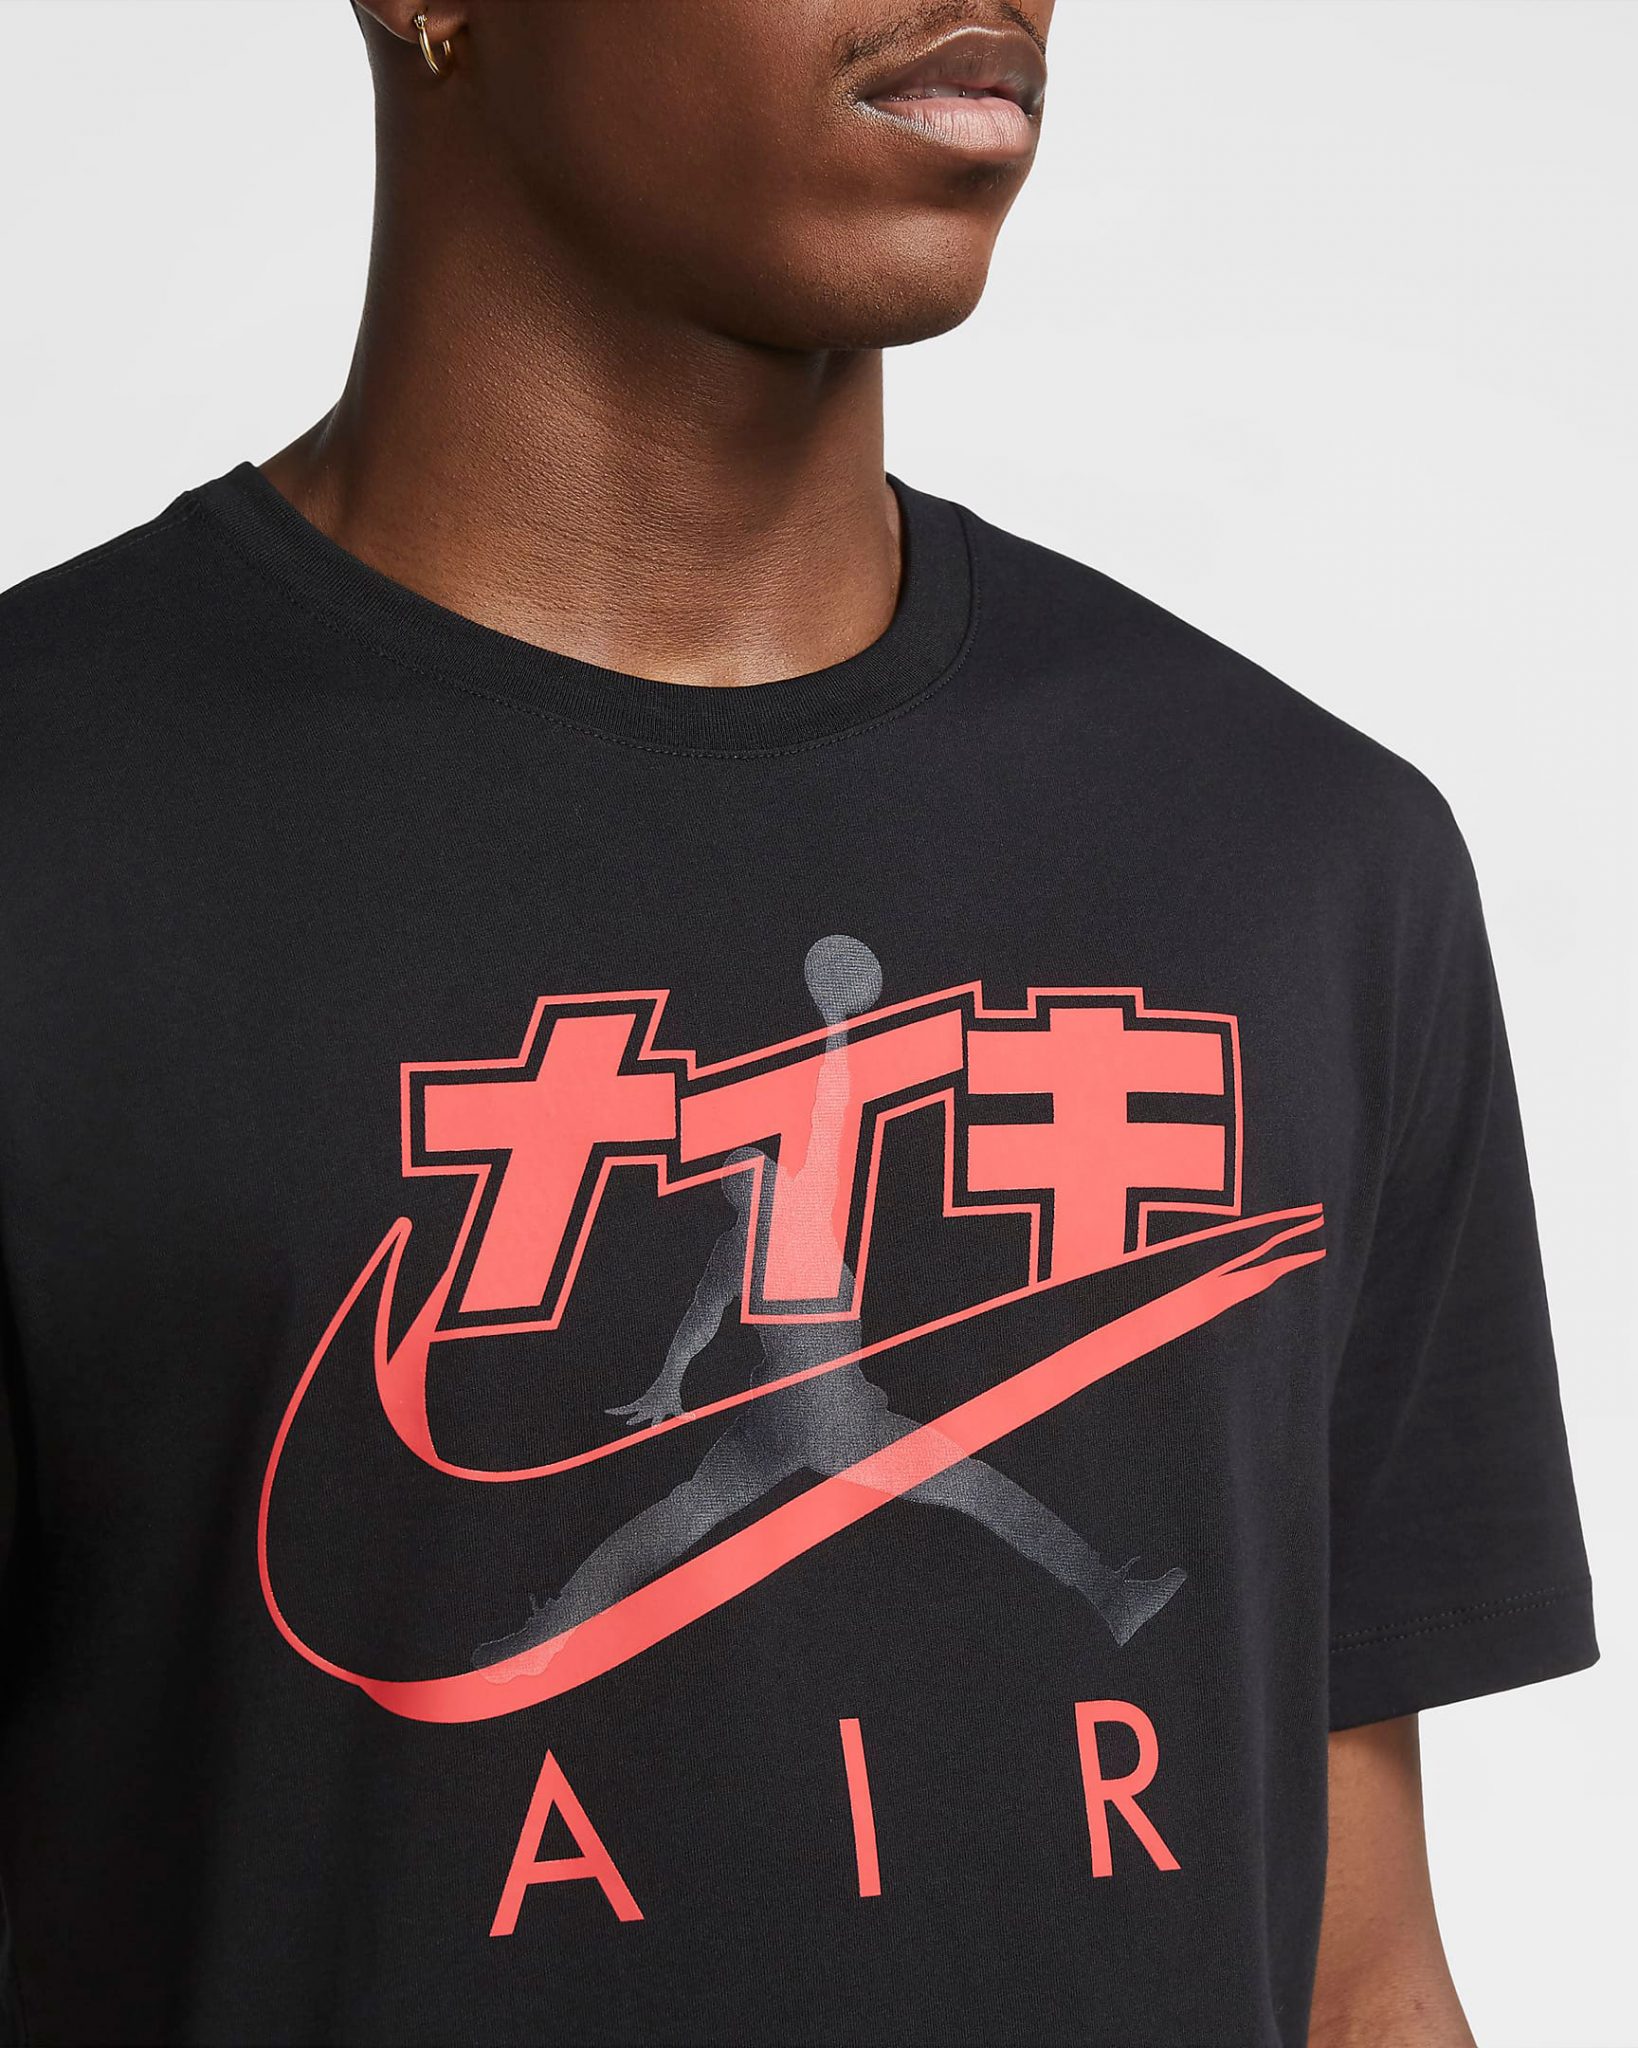 Air Jordan 3 SE Denim Fire Red Japan Shirt | SneakerFits.com